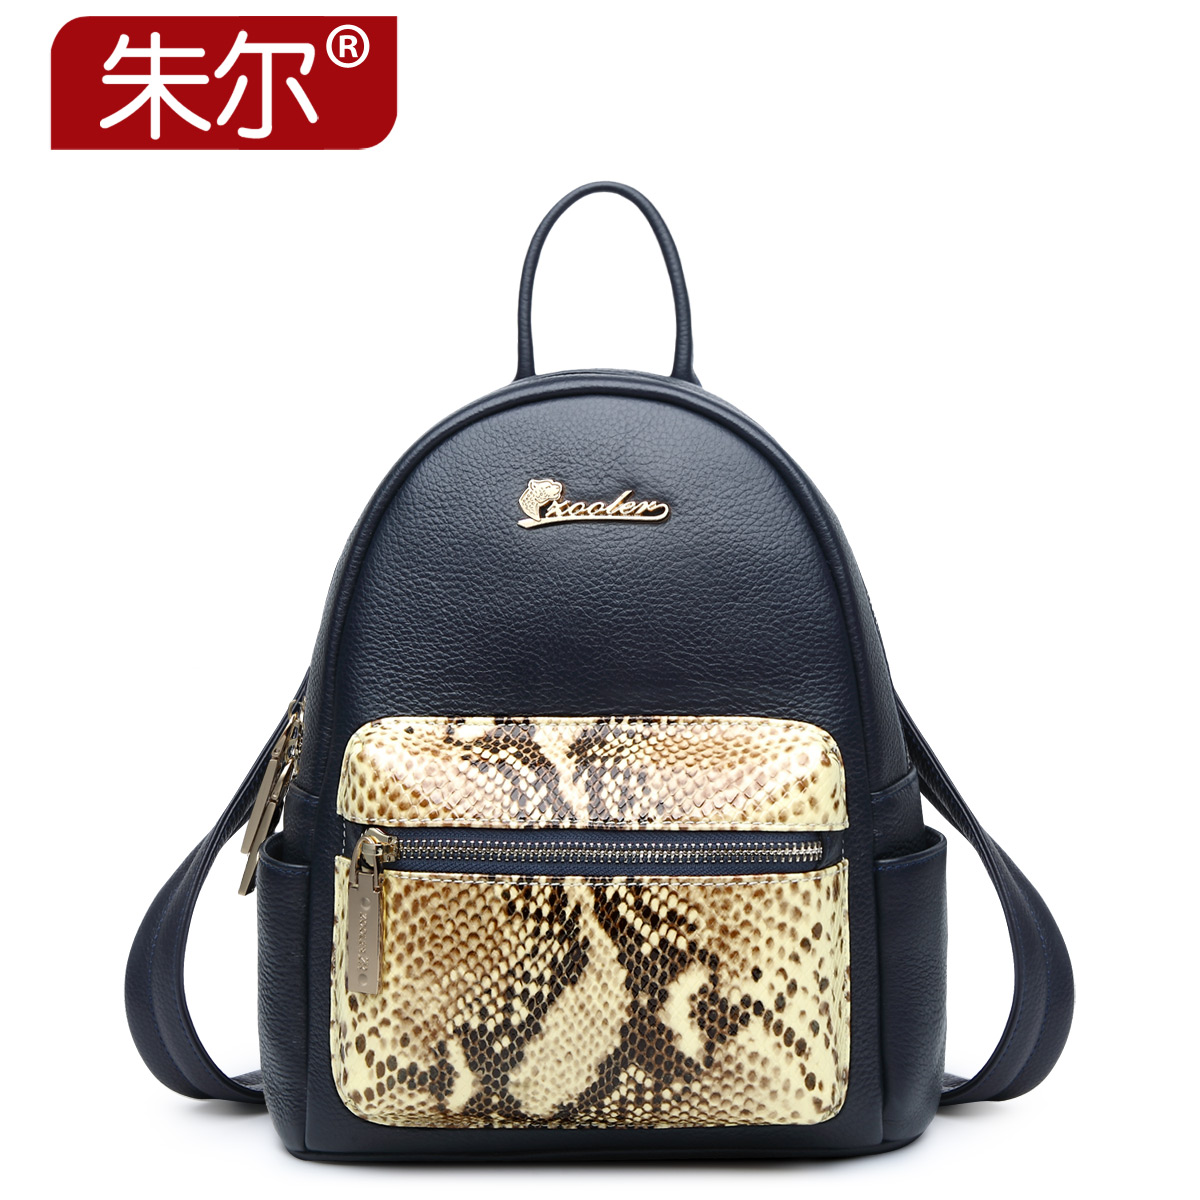 New arrival cowhide double-shoulder women's handbag 2015 fashion serpentine pattern women's backpack trend personality female